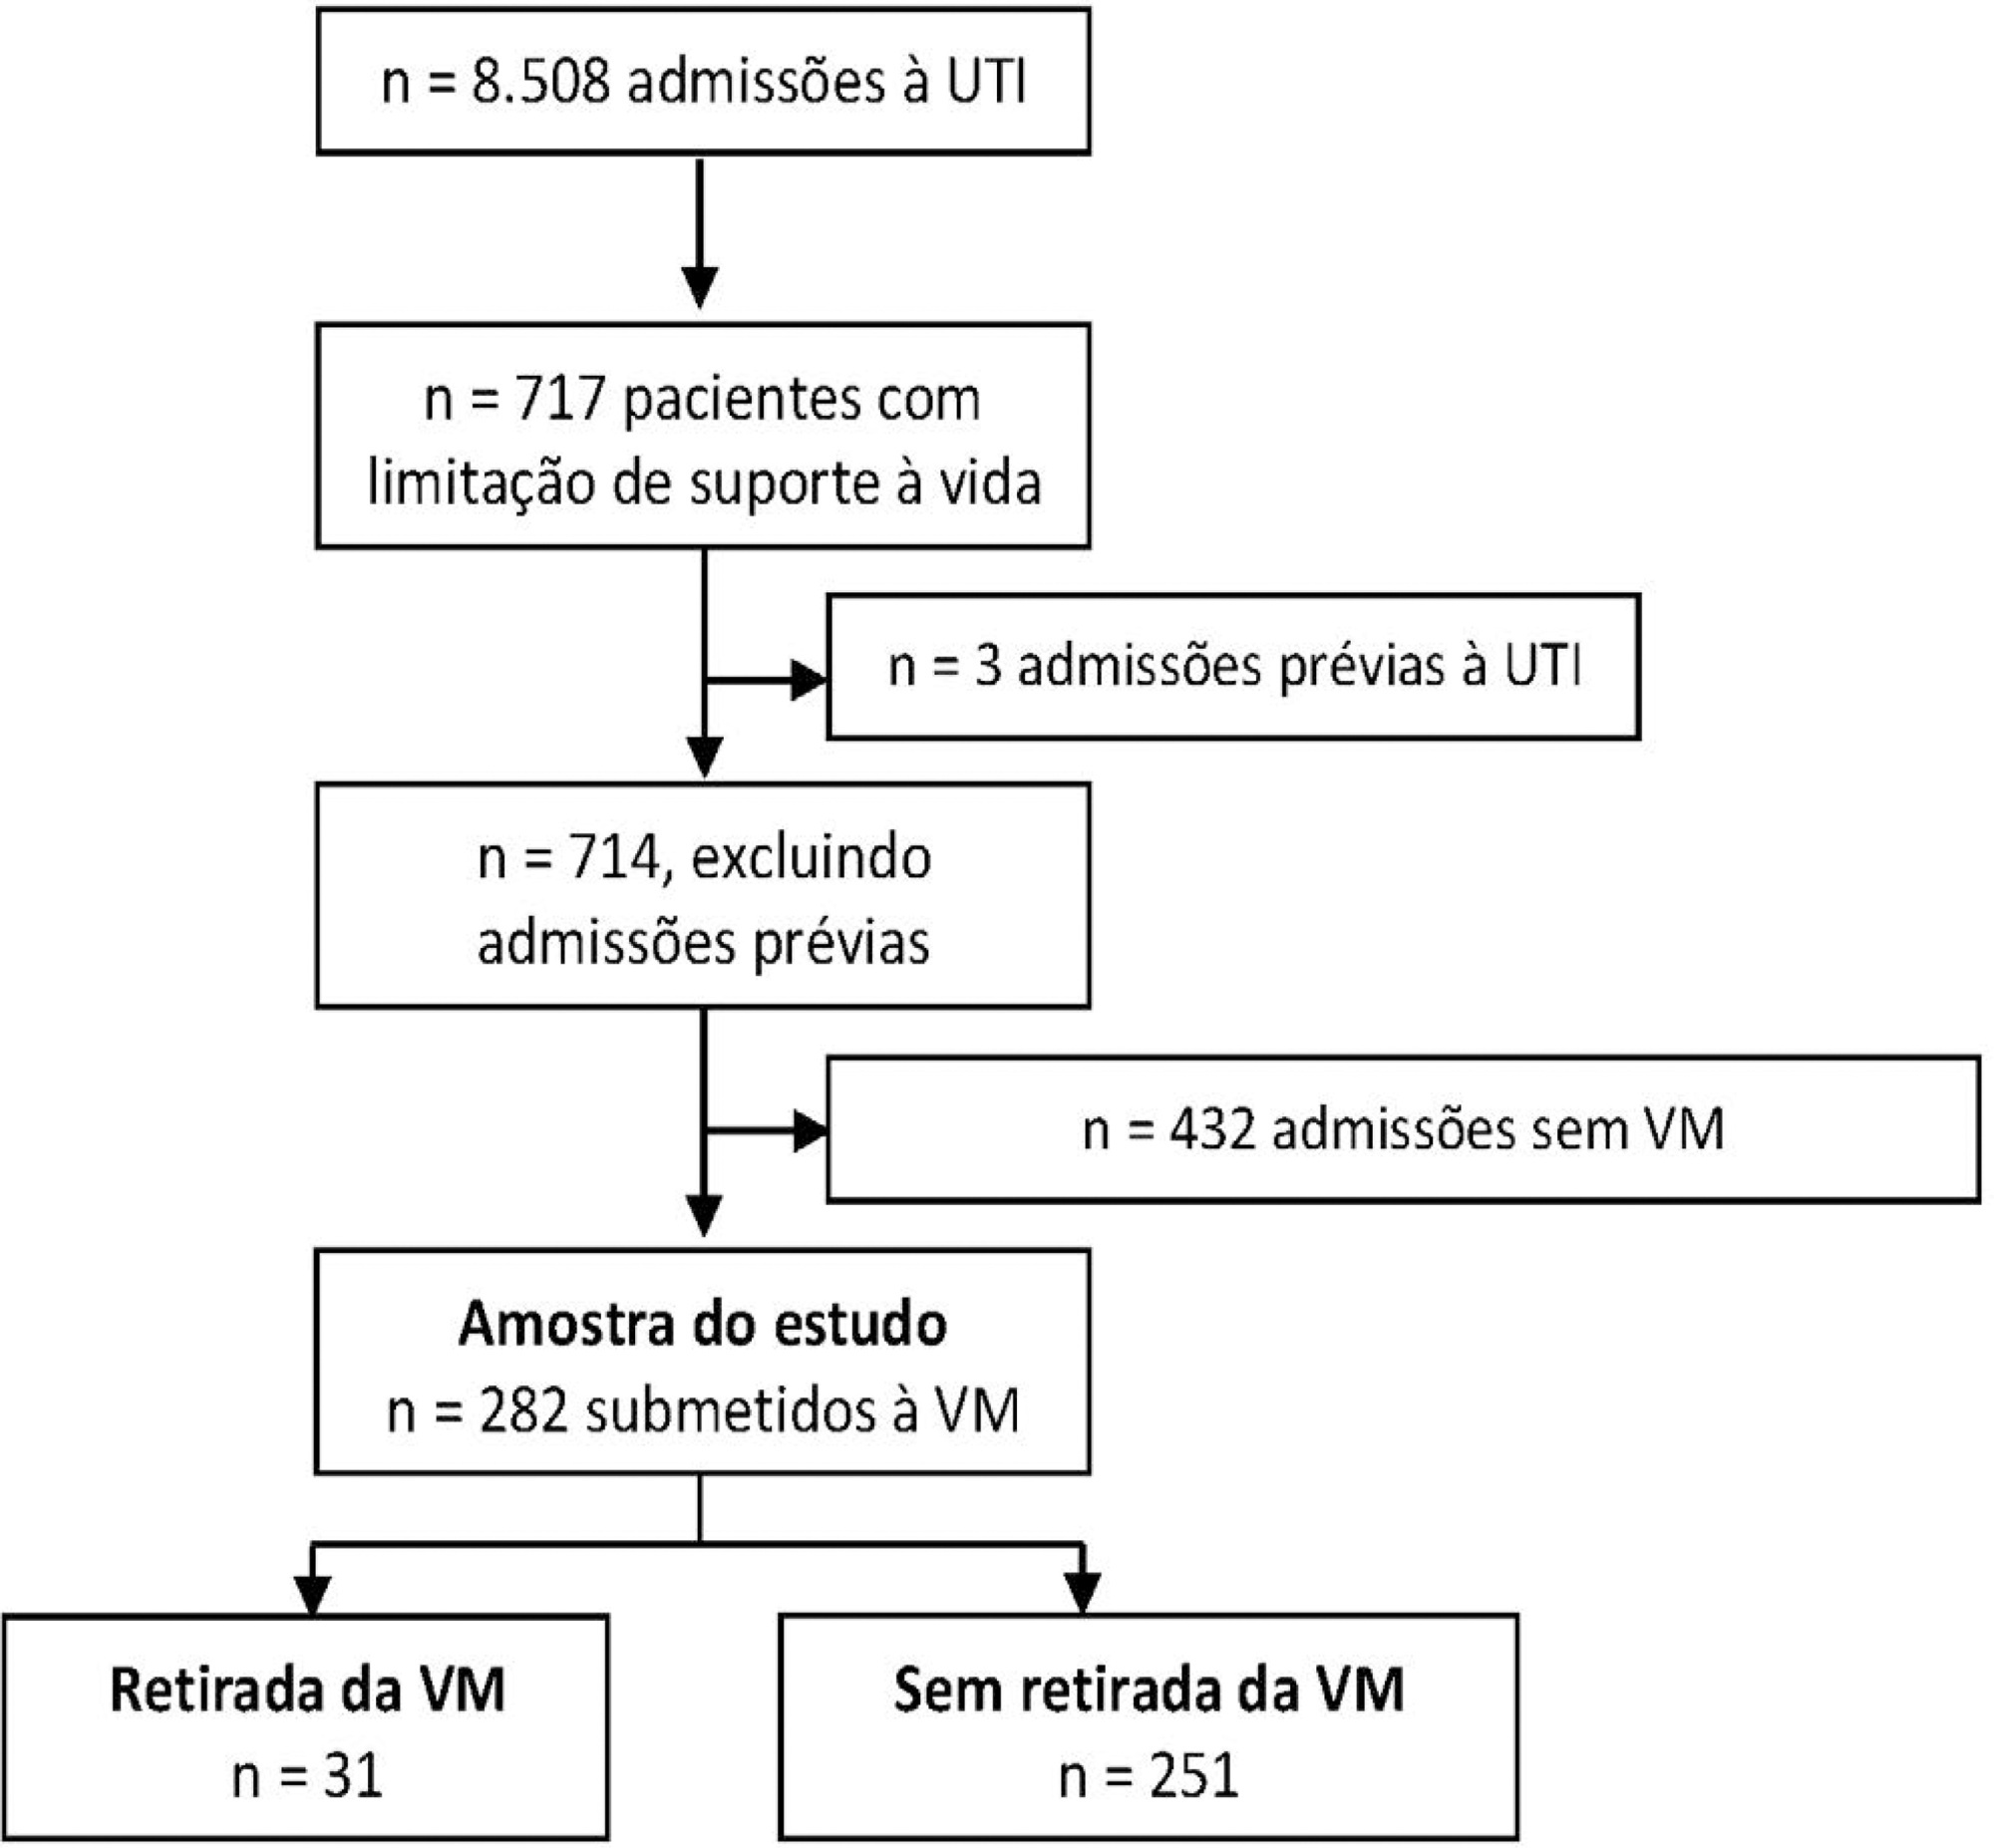 Mechanical ventilation withdrawal as a palliative procedure in a Brazilian intensive care unit